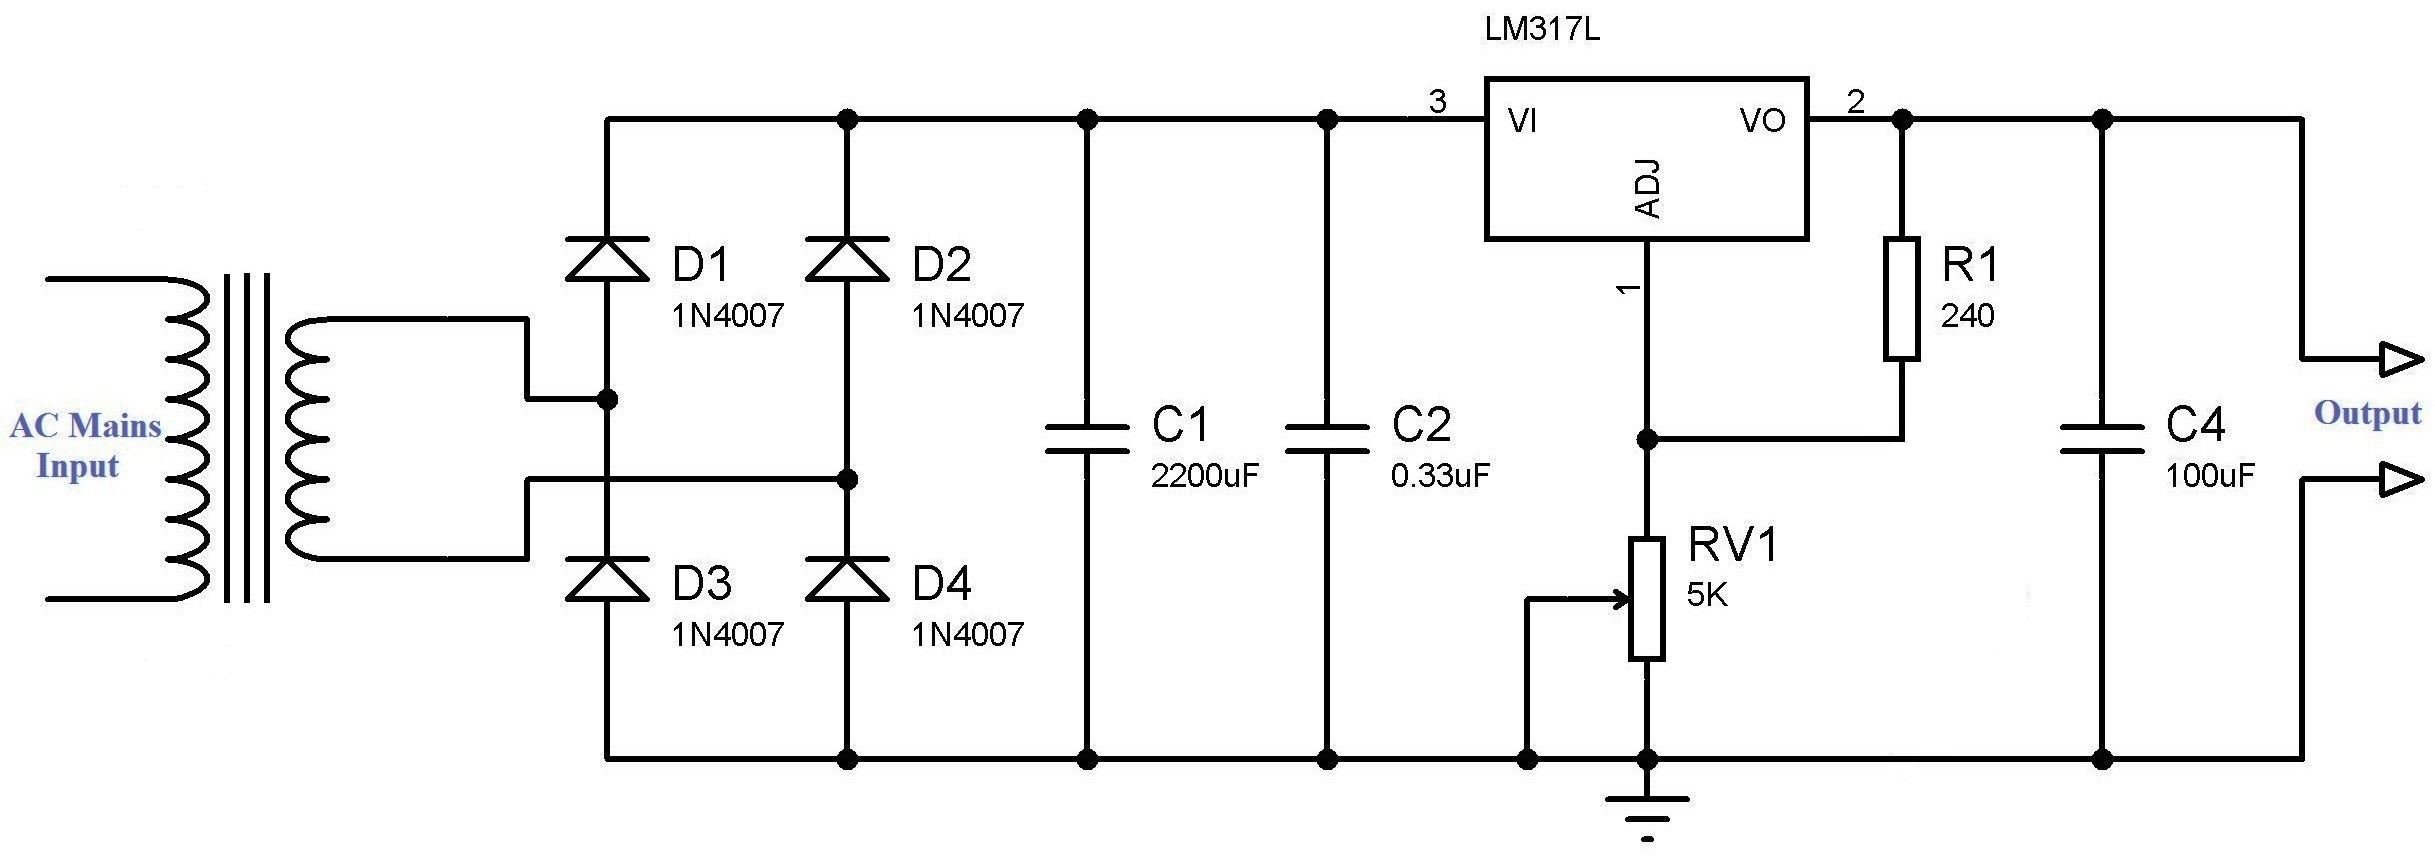 Rv Power Converter Wiring Diagram Unique Lm317 Adjustable Voltage Regulator Wiring Diagram Ponents